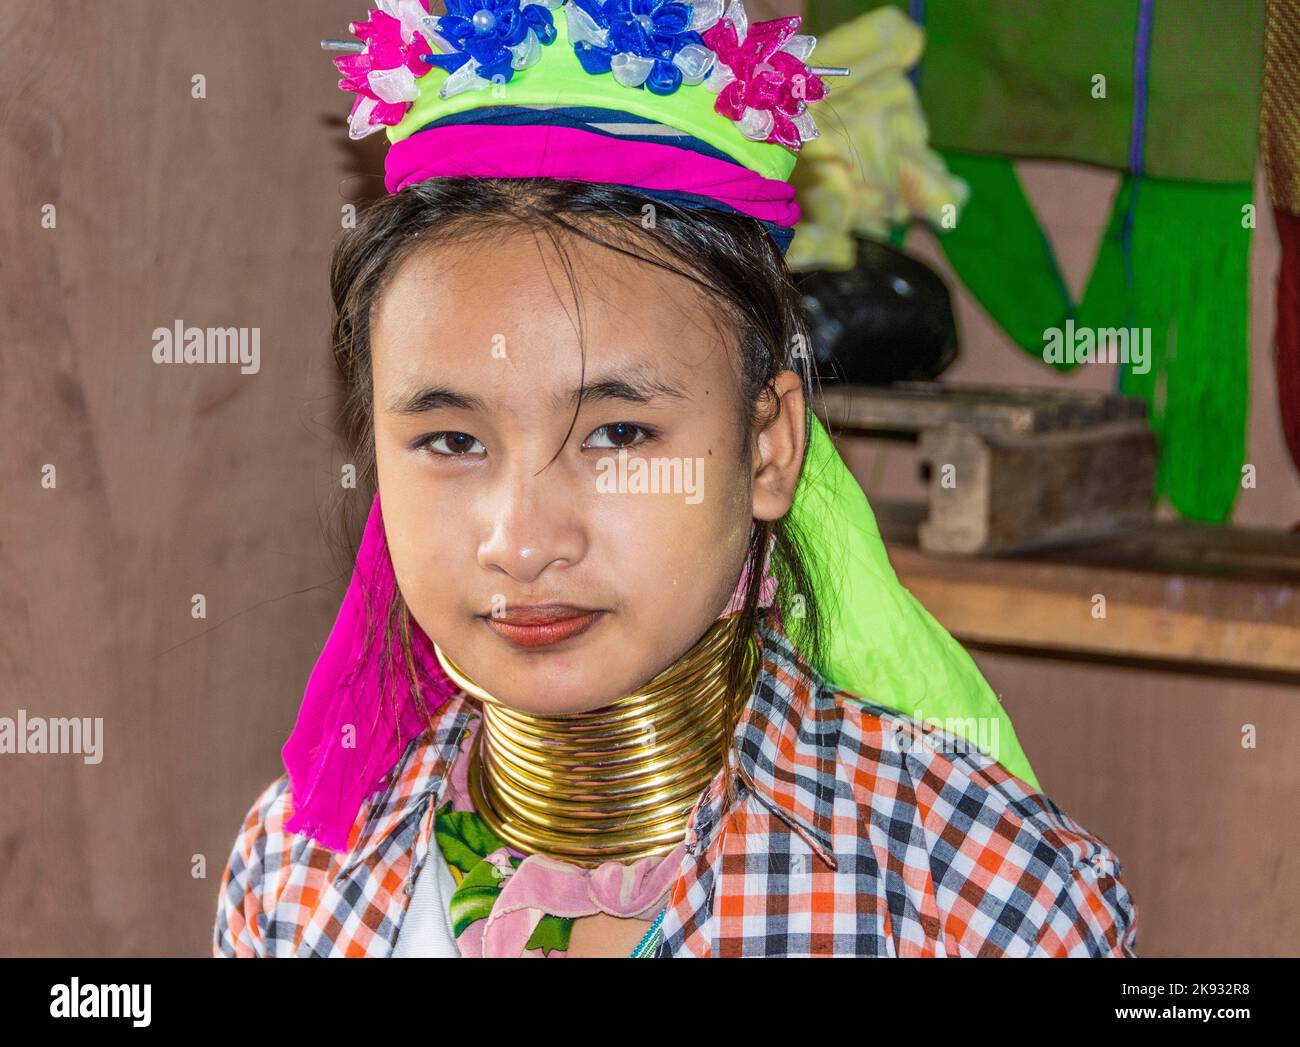 NYAUNG SHWE, MYANMAR - AUG 16, 2015: portrait of Padaung tribe woman in Nyaungshwe, Myanmar. Padaung is a Shan term for the Kayan Lahwi people. Stock Photo